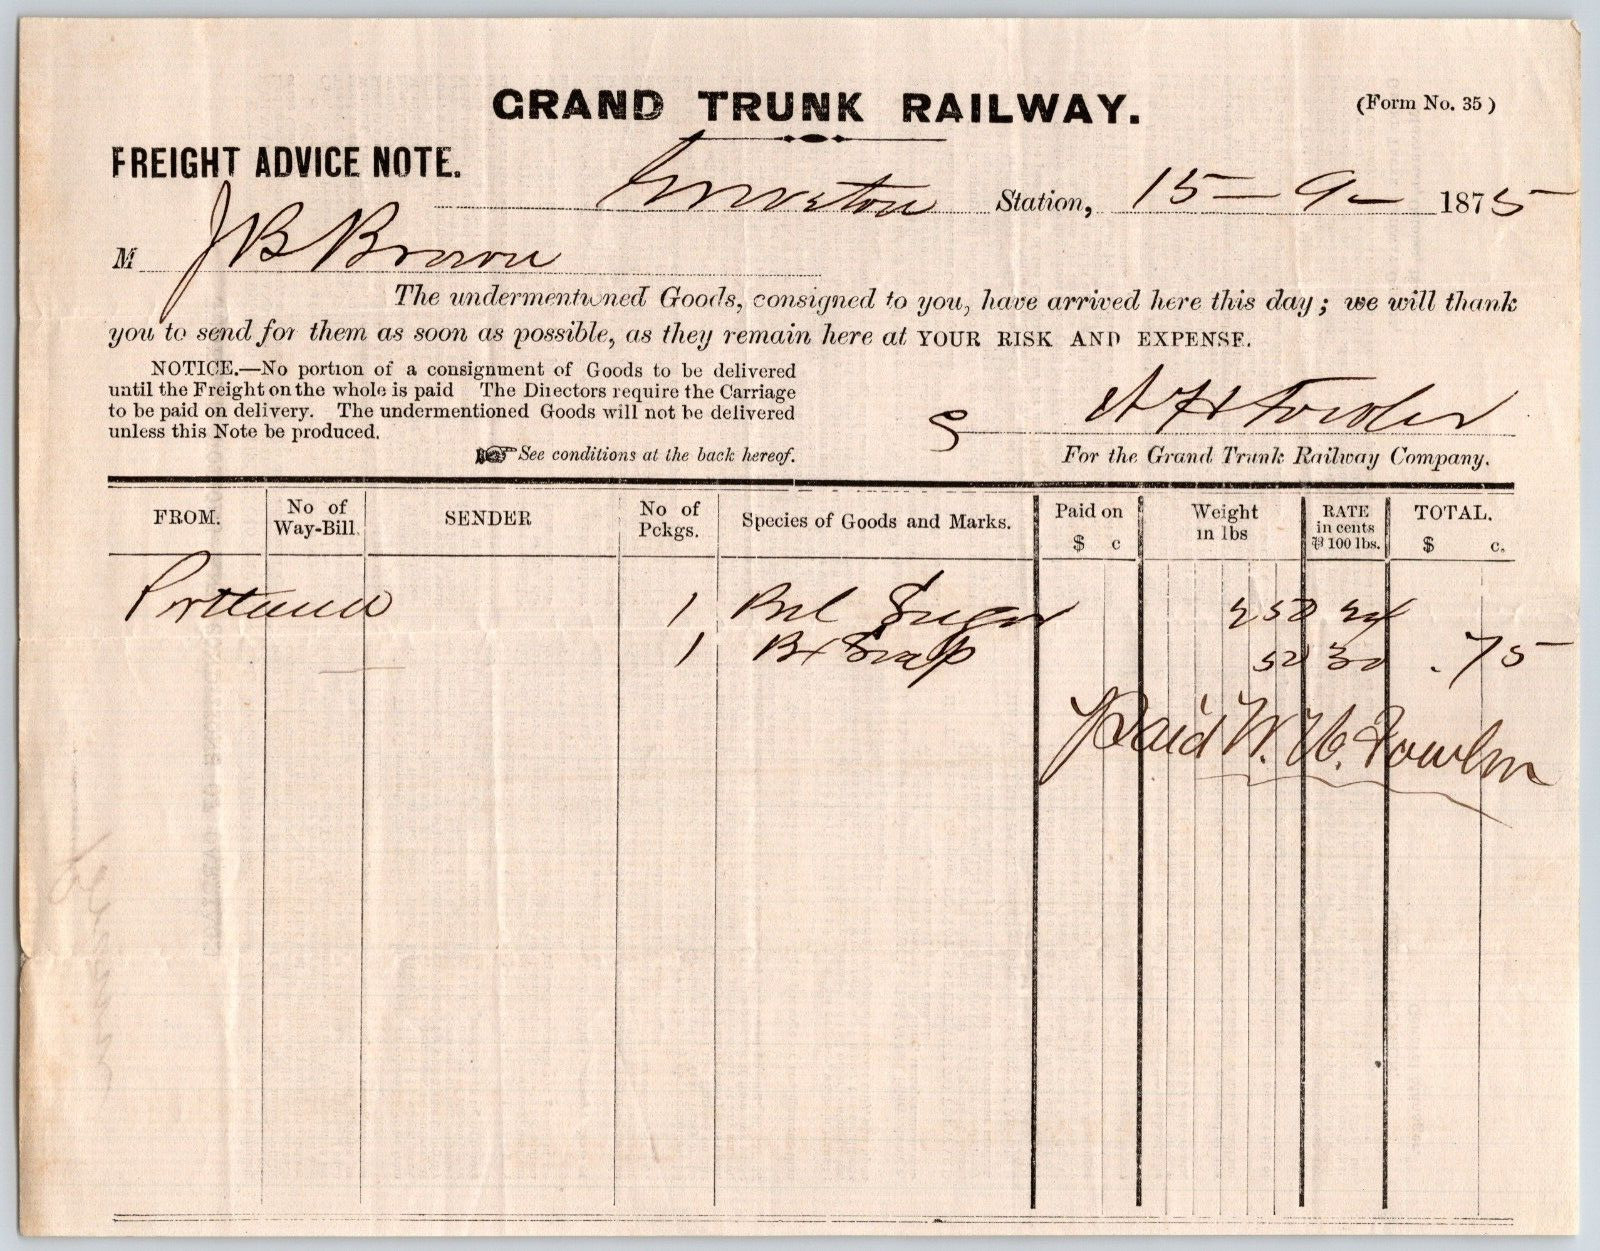 Grand Trunk Railway 1875 Freight Advice Note Receipt for Barrel Sugar & Box Soap